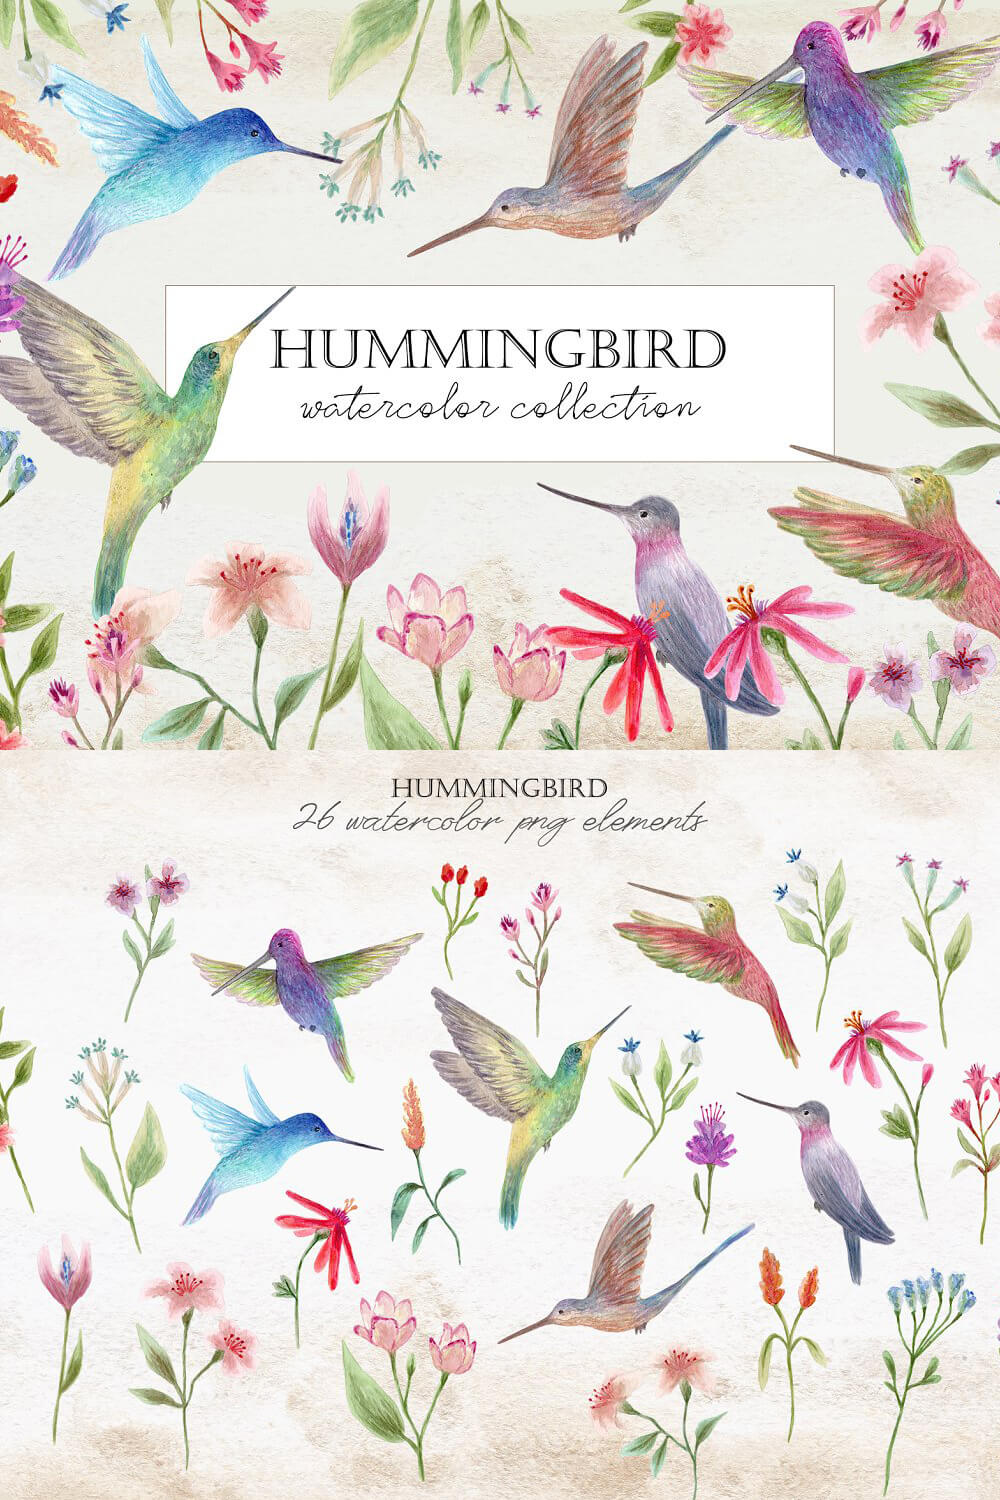 Hummingbird watercolor collection.